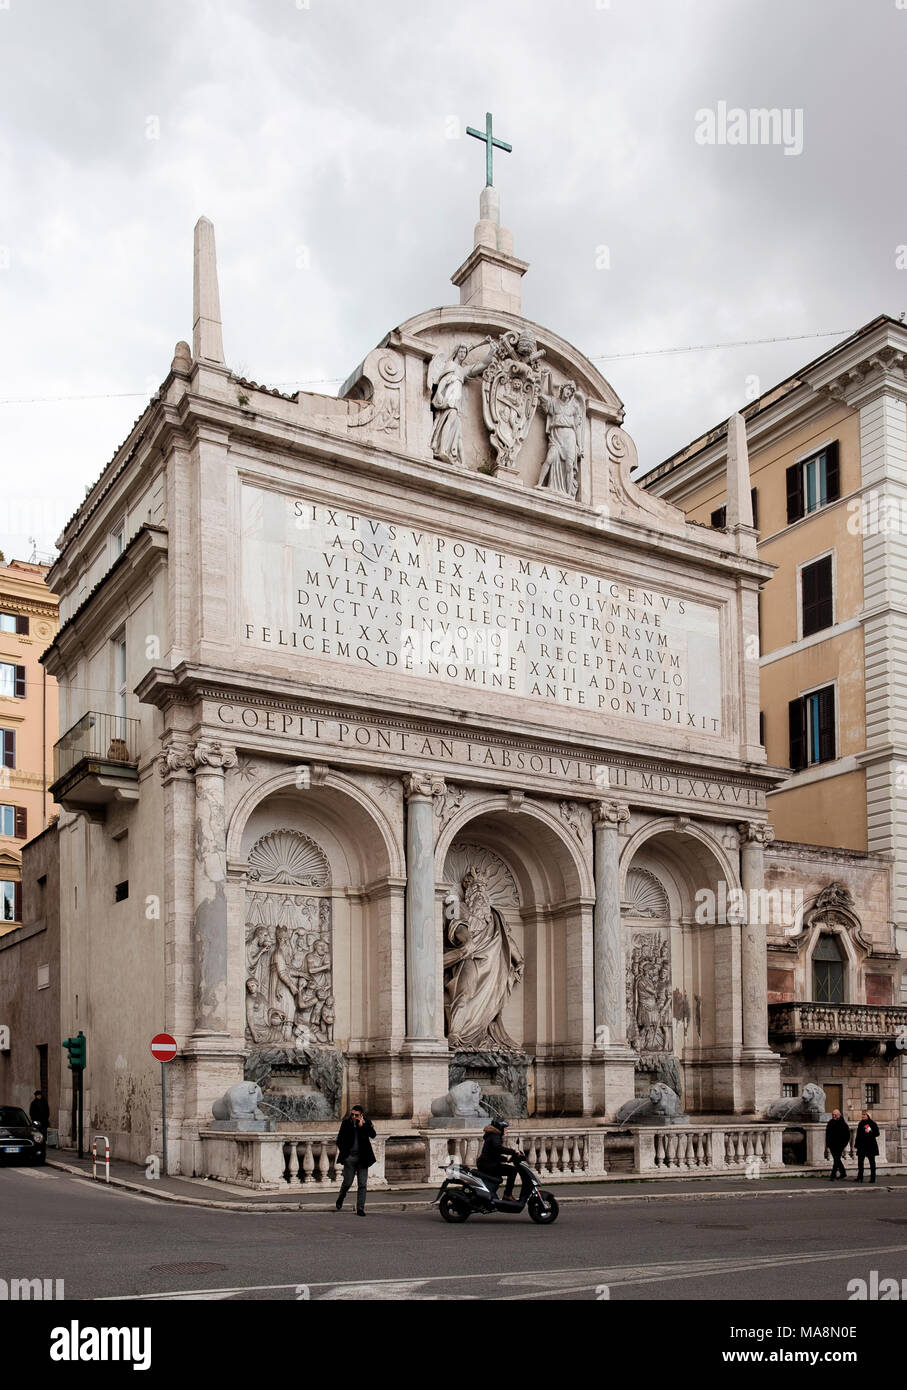 Fontana del Mosè on Piazza di San Bernado, Rome Stock Photo